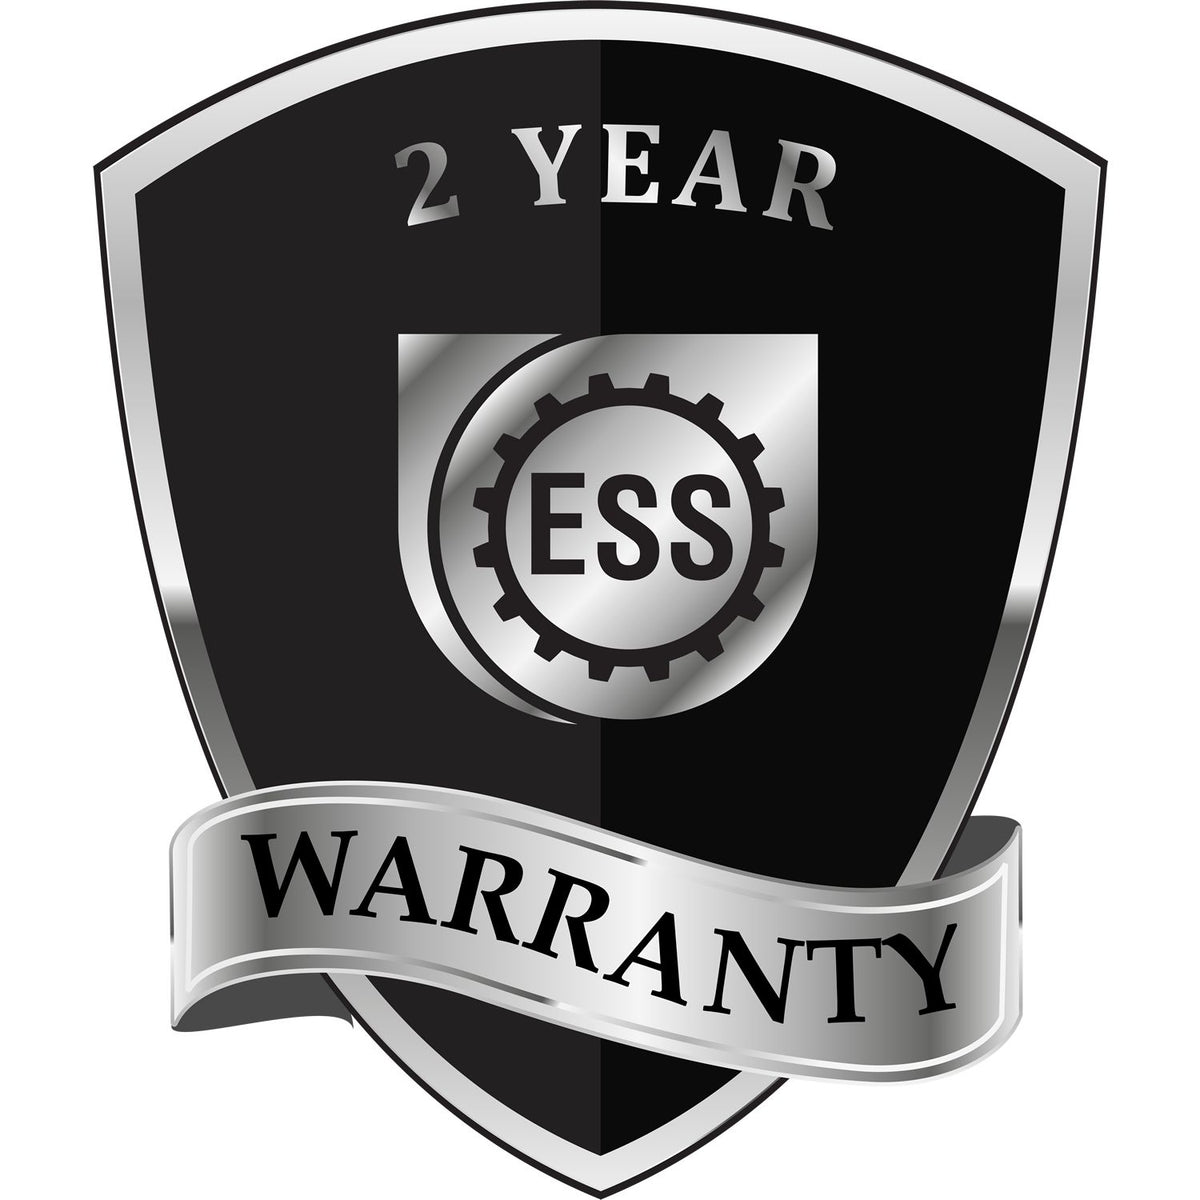 A black and silver badge or emblem showing warranty information for the Hybrid Indiana Land Surveyor Seal